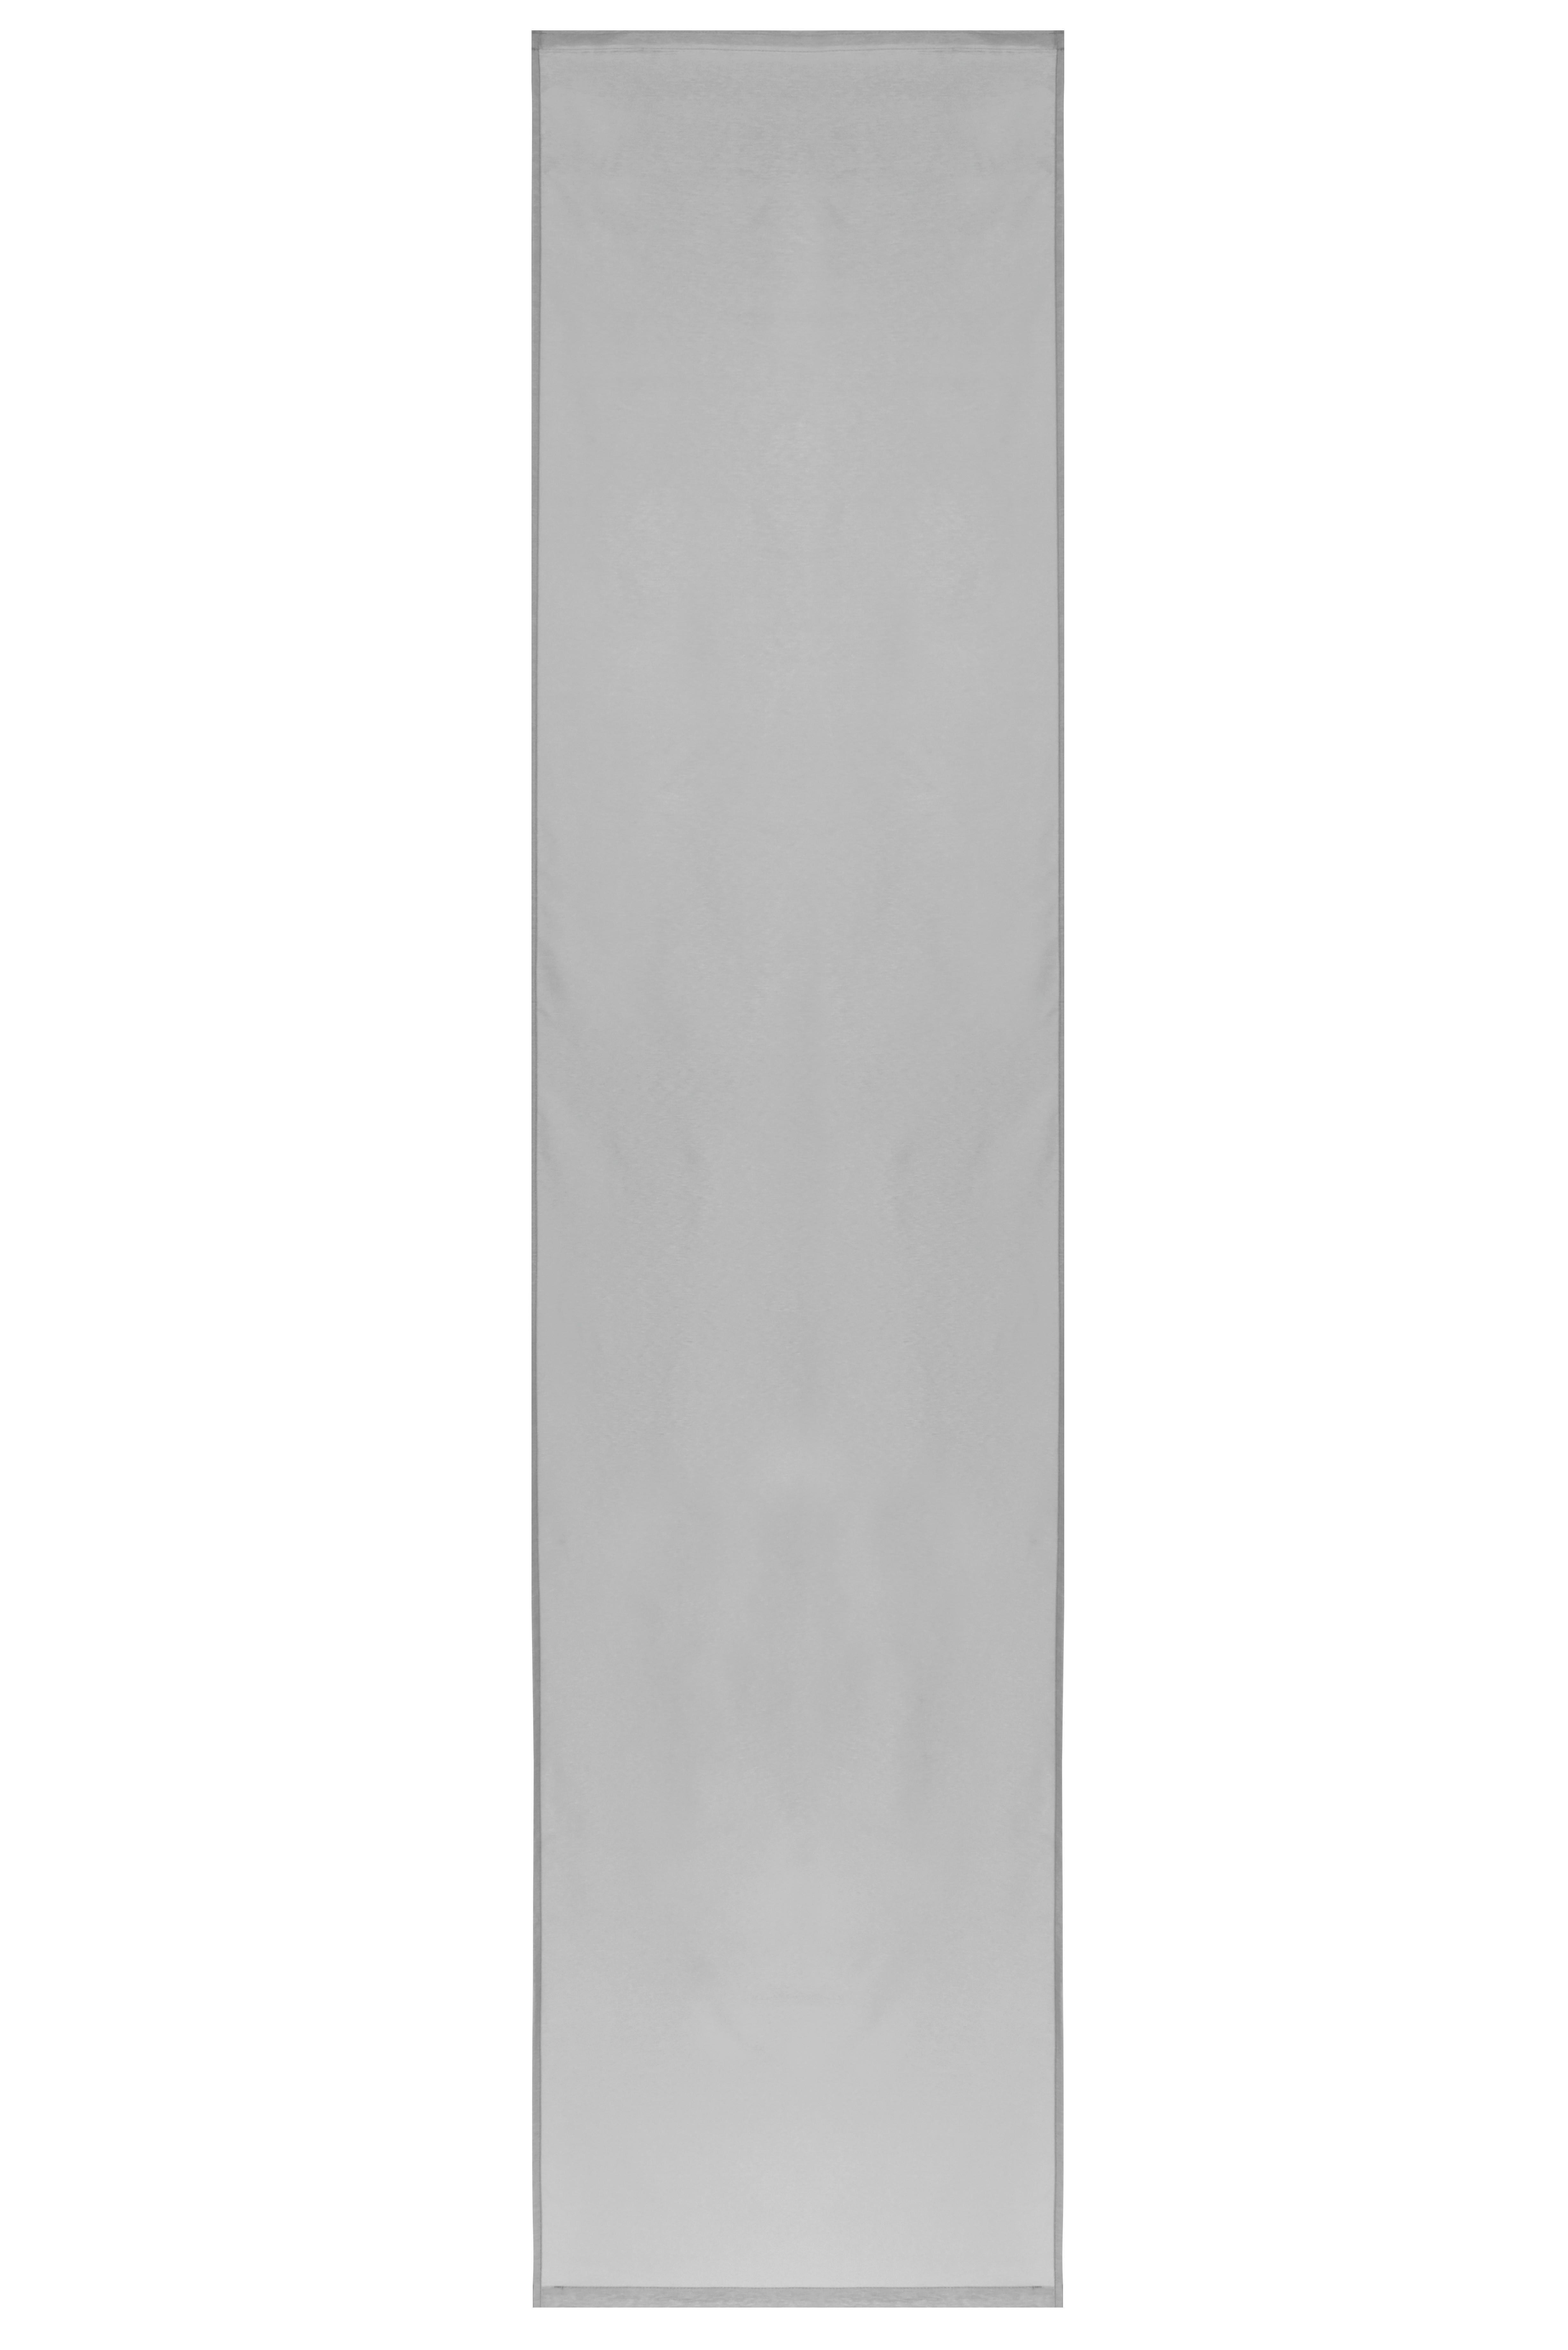 Schiebevorhang Pearl grau B/L: ca. 60x245 cm Pearl - grau (60,00/245,00cm) - ACUS design collection